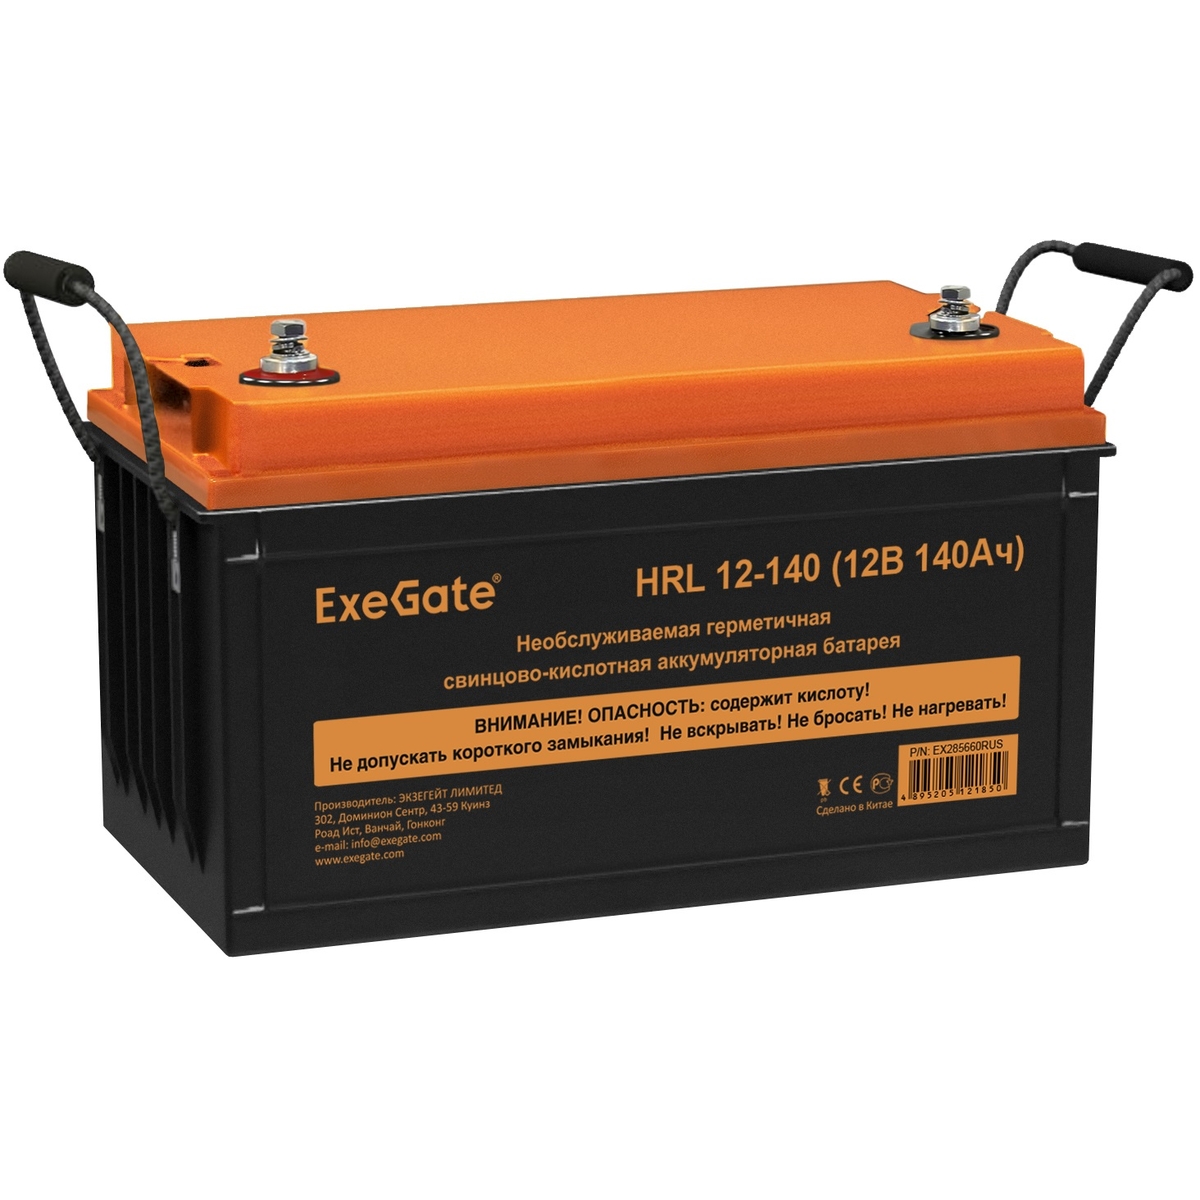 UPS set EX296002 + battery 140Ah EX285660 2 piece